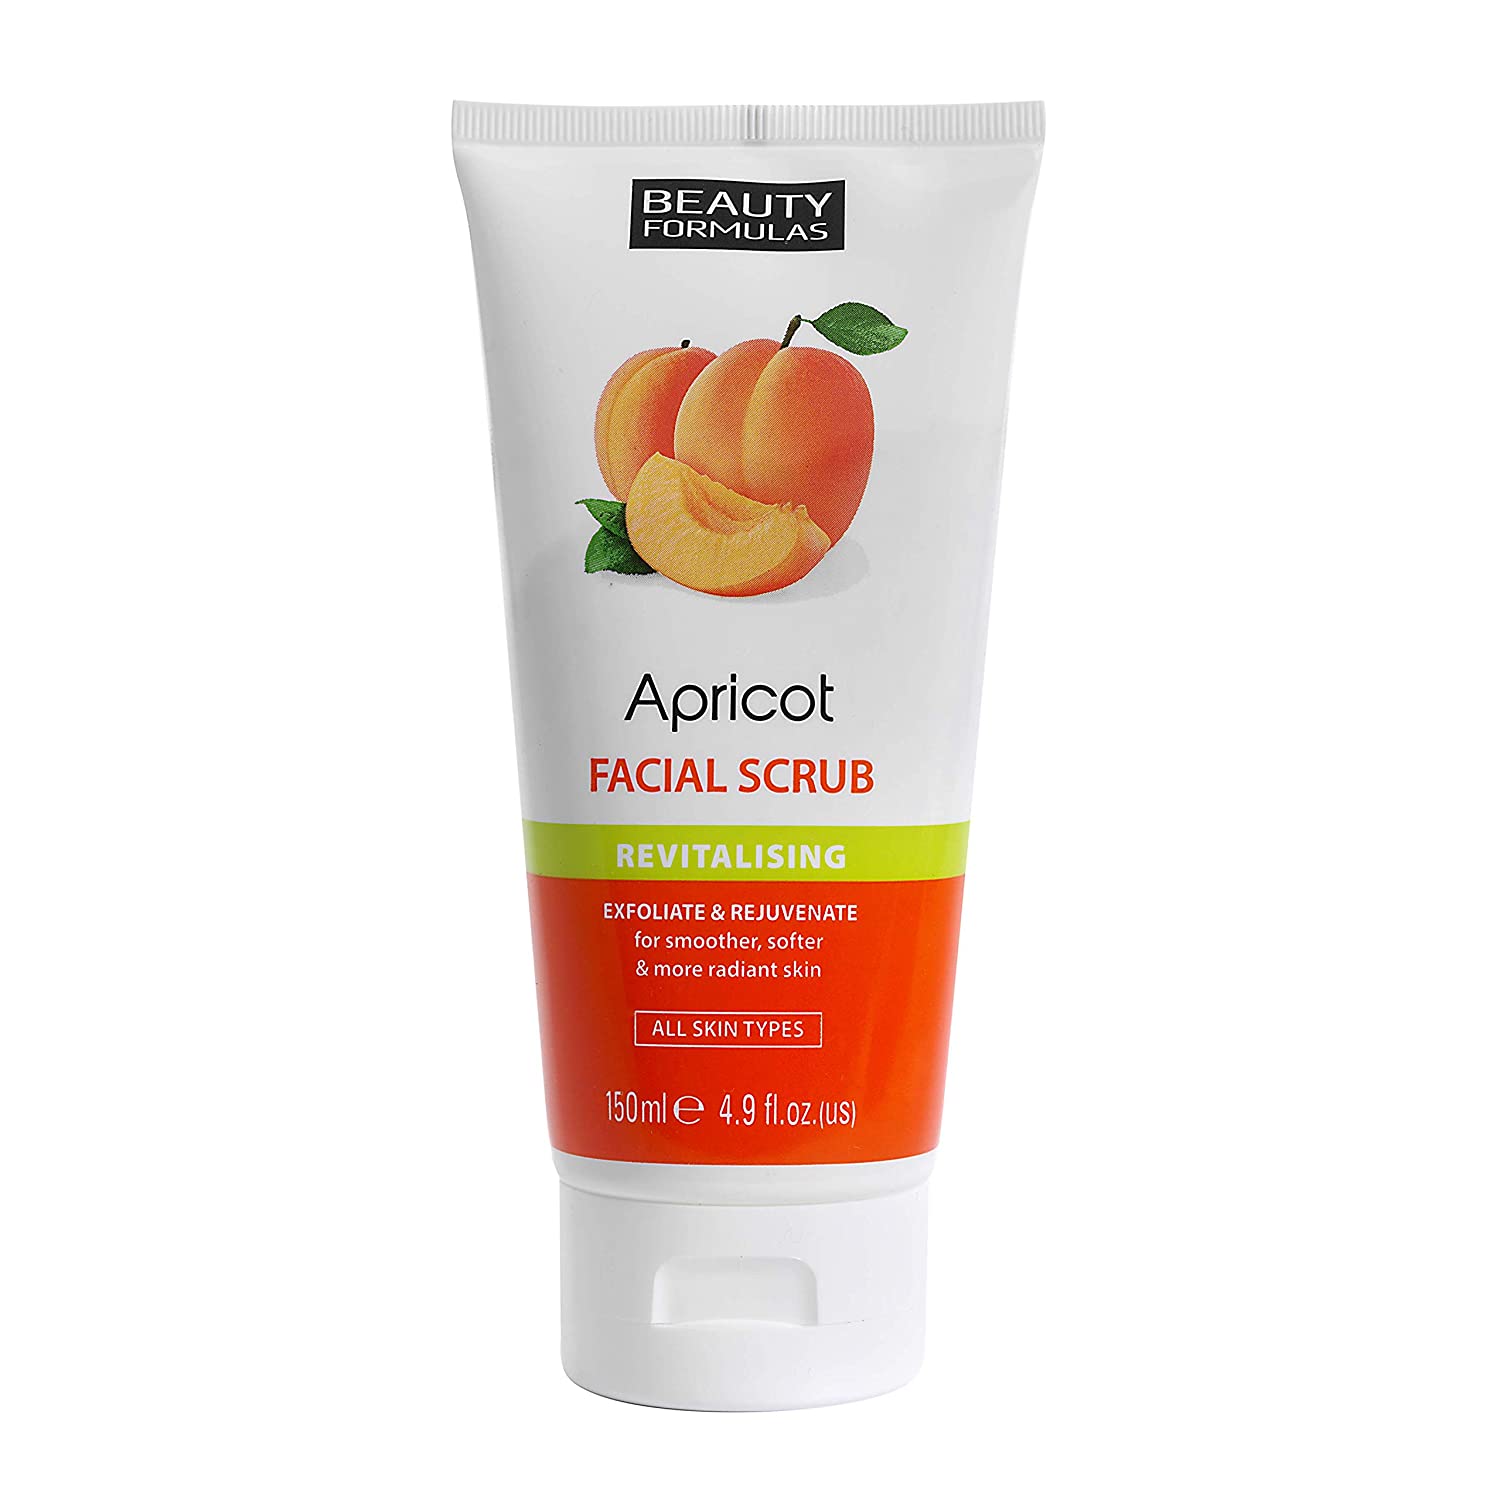 Beauty Formulas Apricot Facial Scrub Revitalising (150ml)